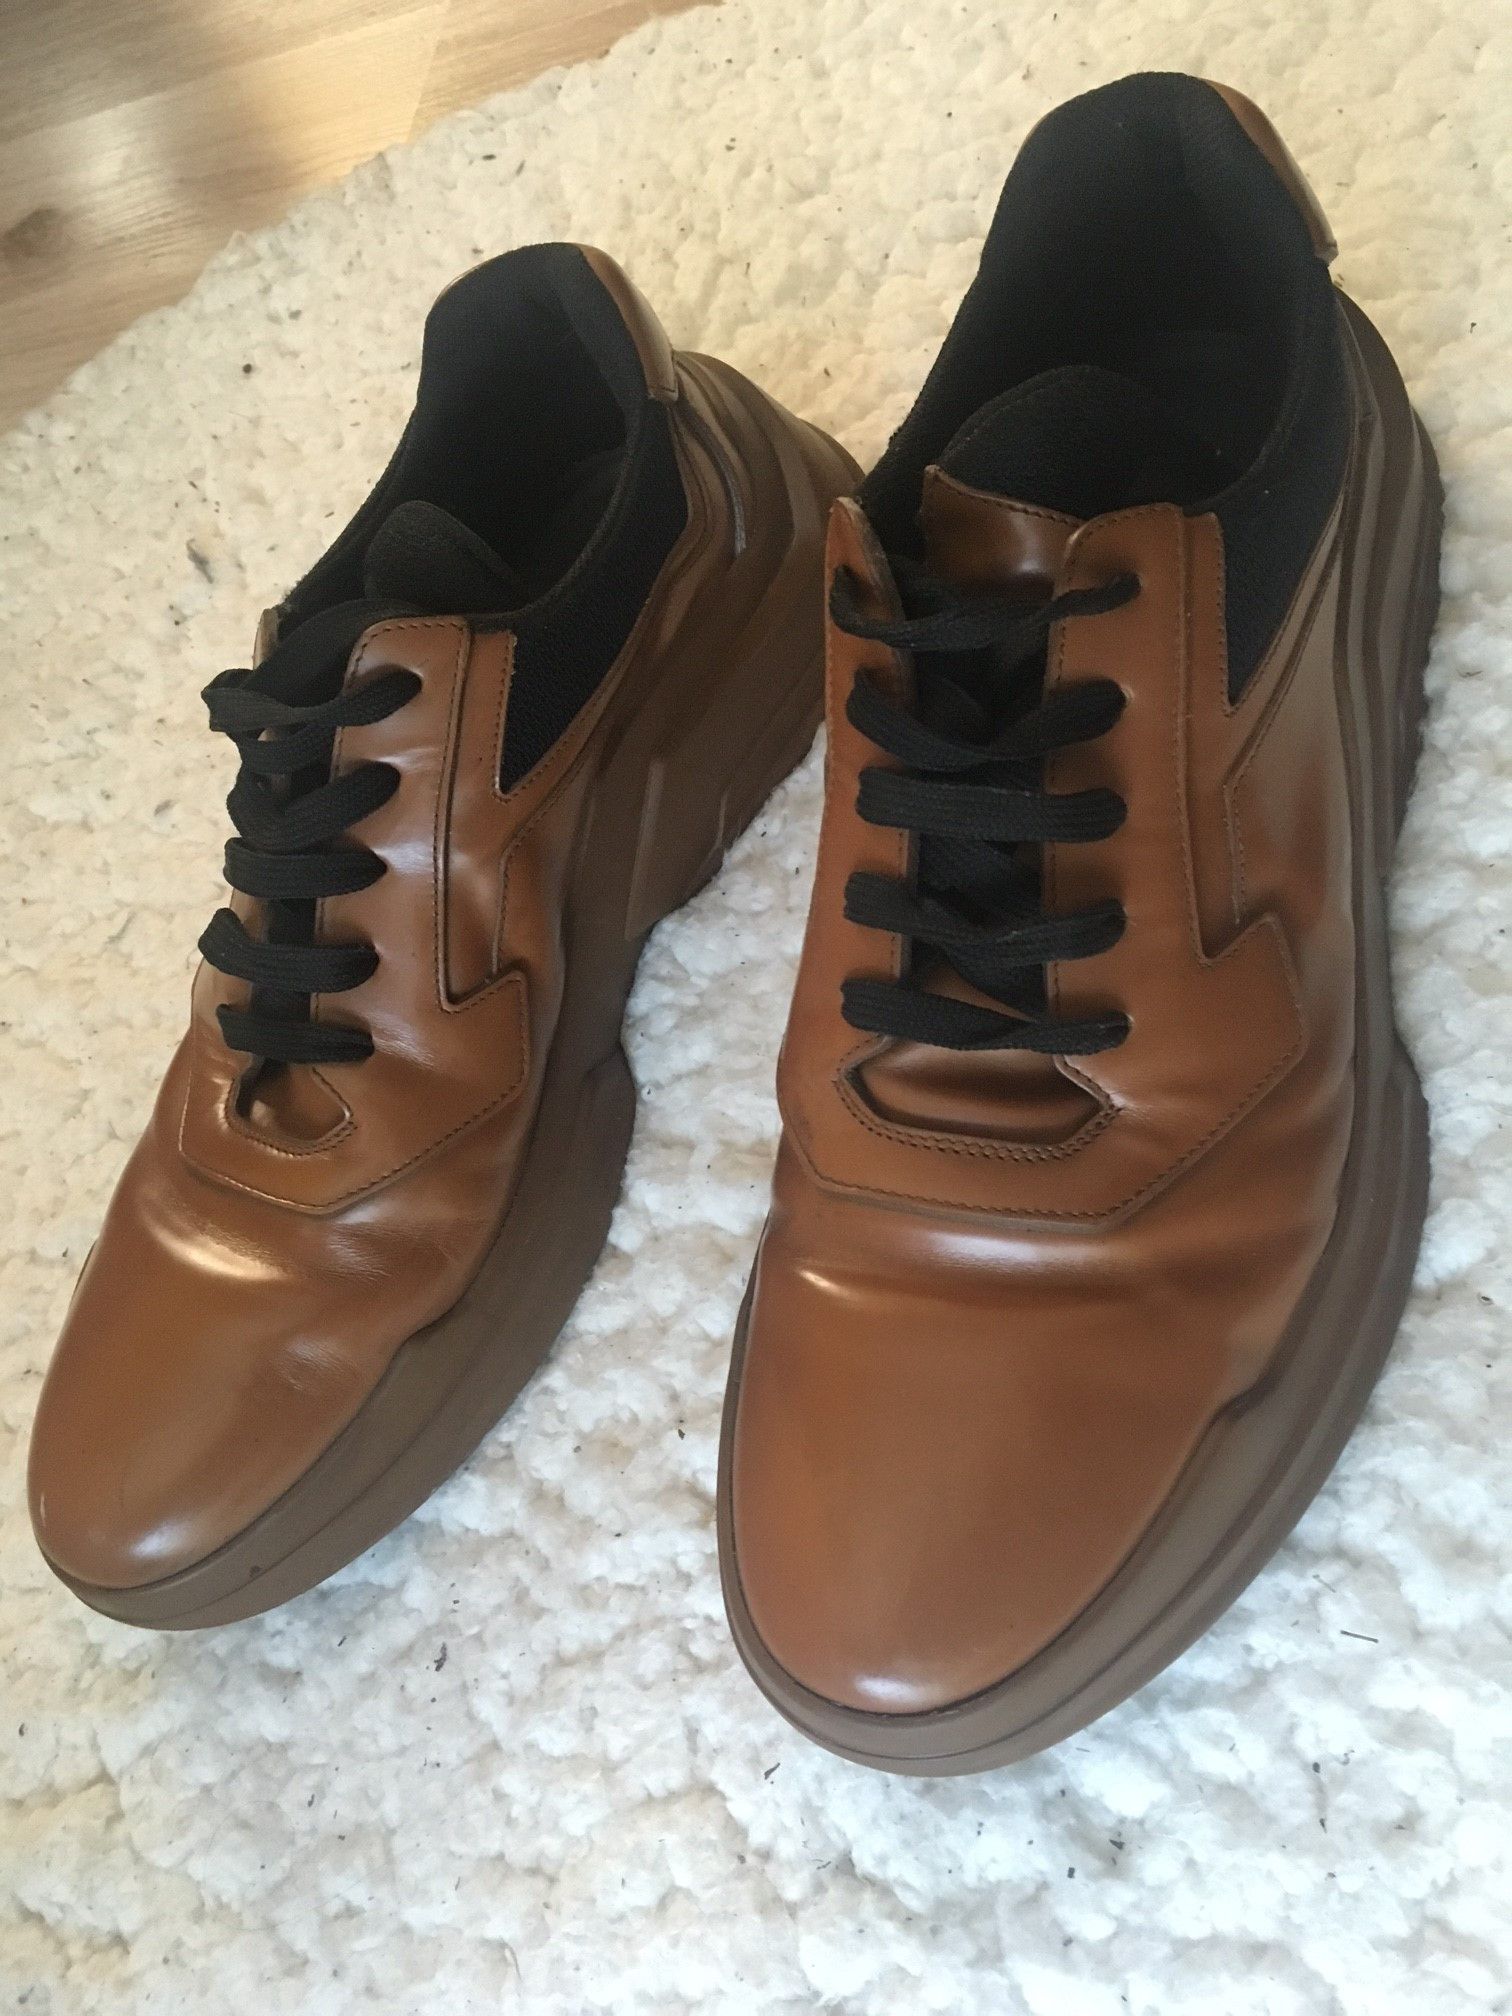 Prada Prada rubber sole sneakers 10 11 Size US 11 / EU 44 - 6 Preview